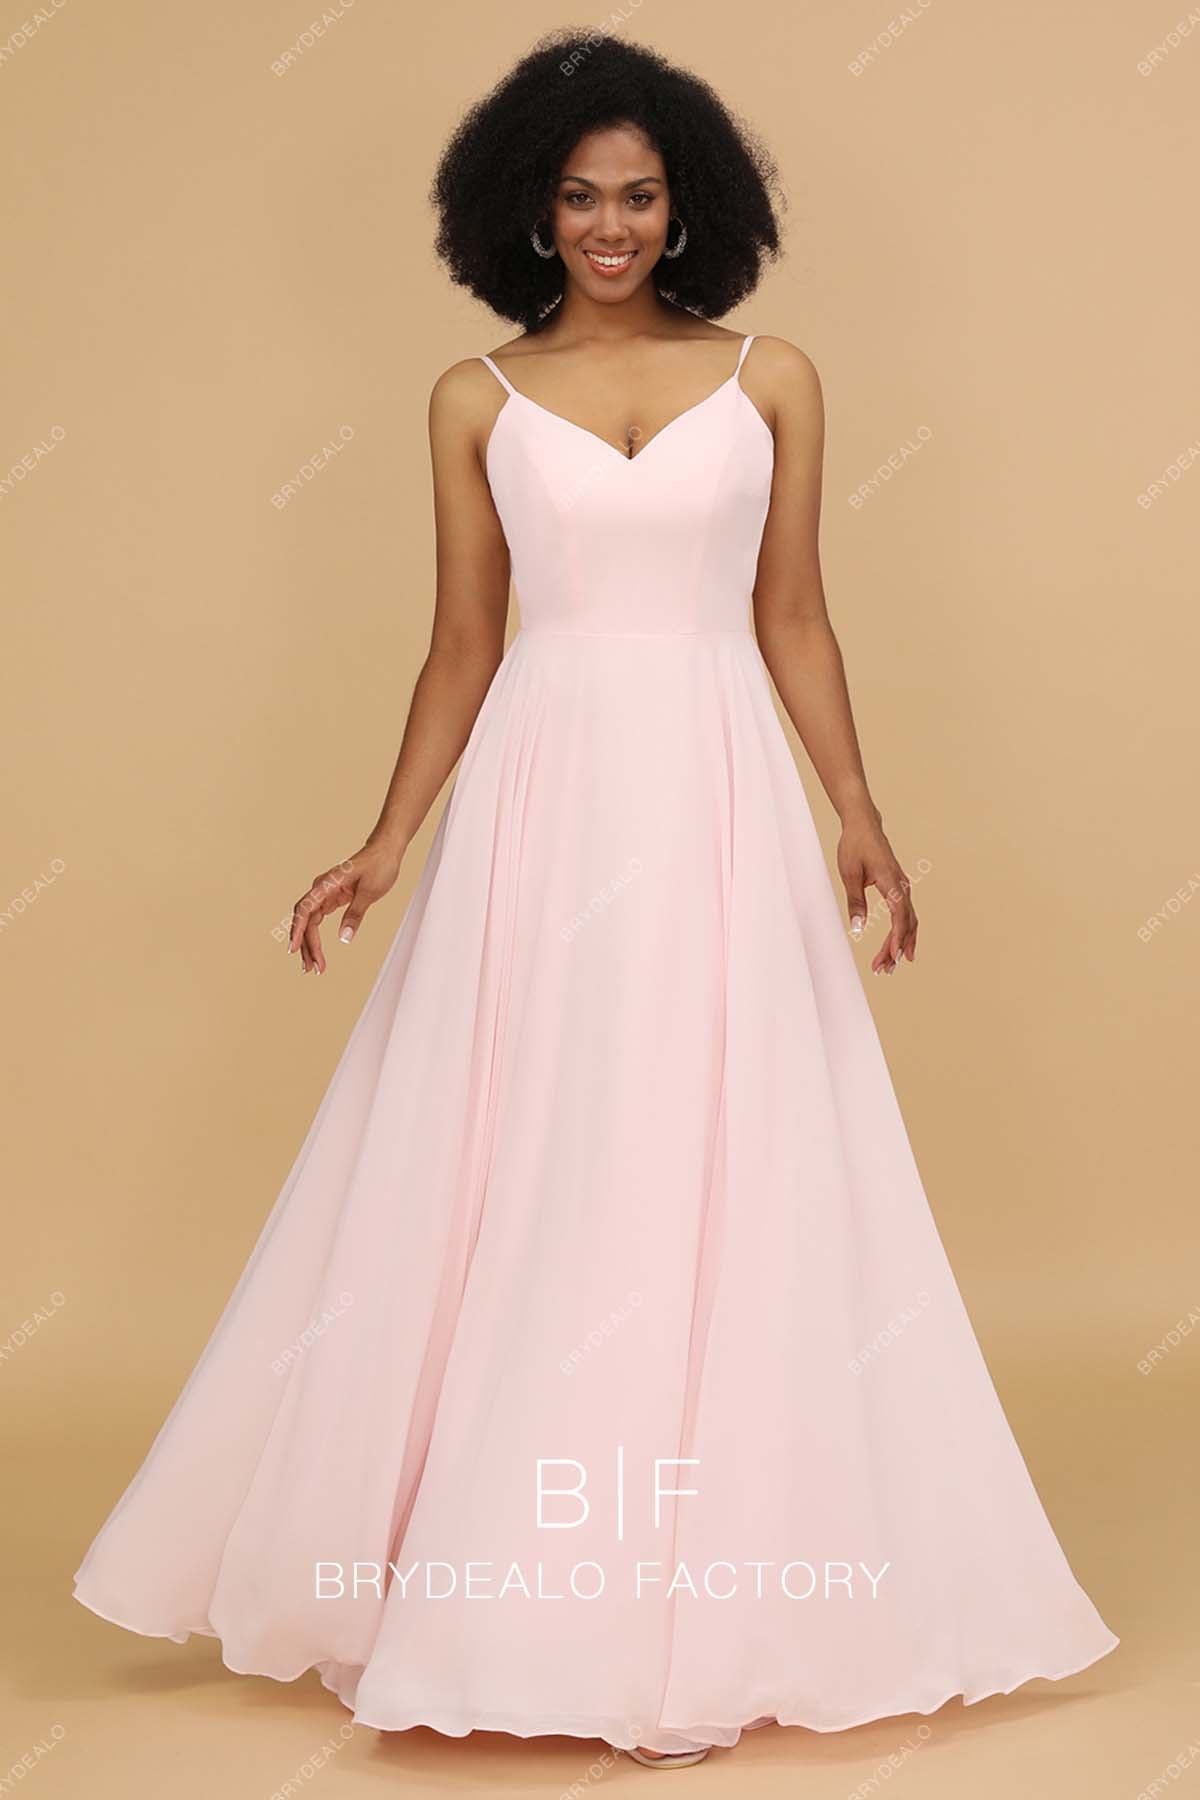 V-neck light pink chiffon bridesmaid dress